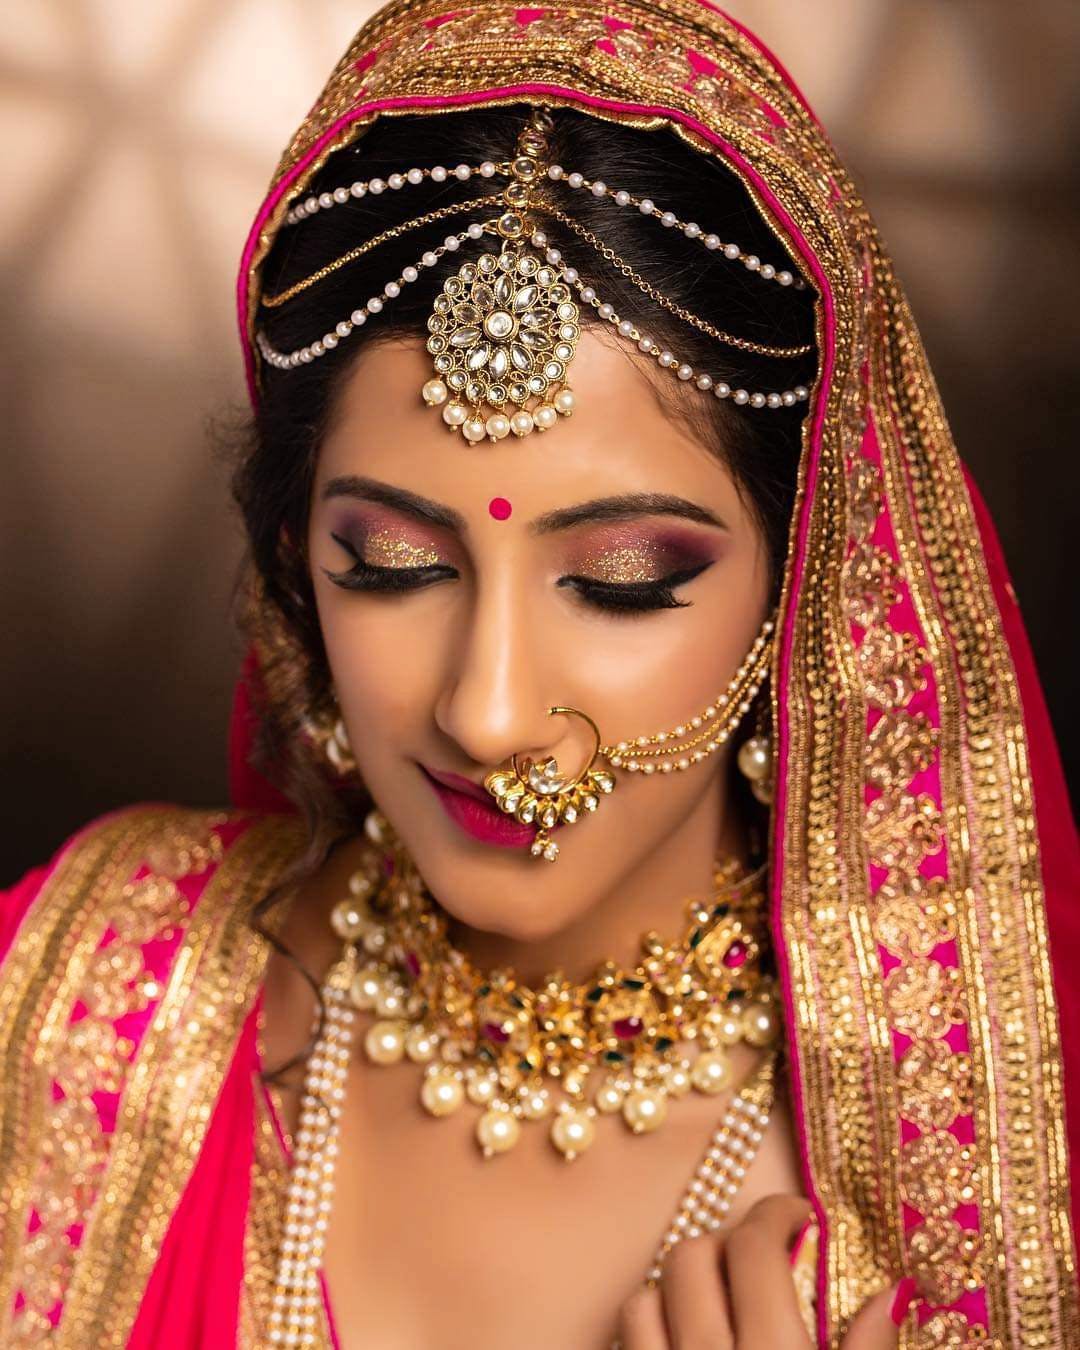 Bride,Lady,Jewellery,Tradition,Makeover,Sari,Fashion accessory,Headpiece